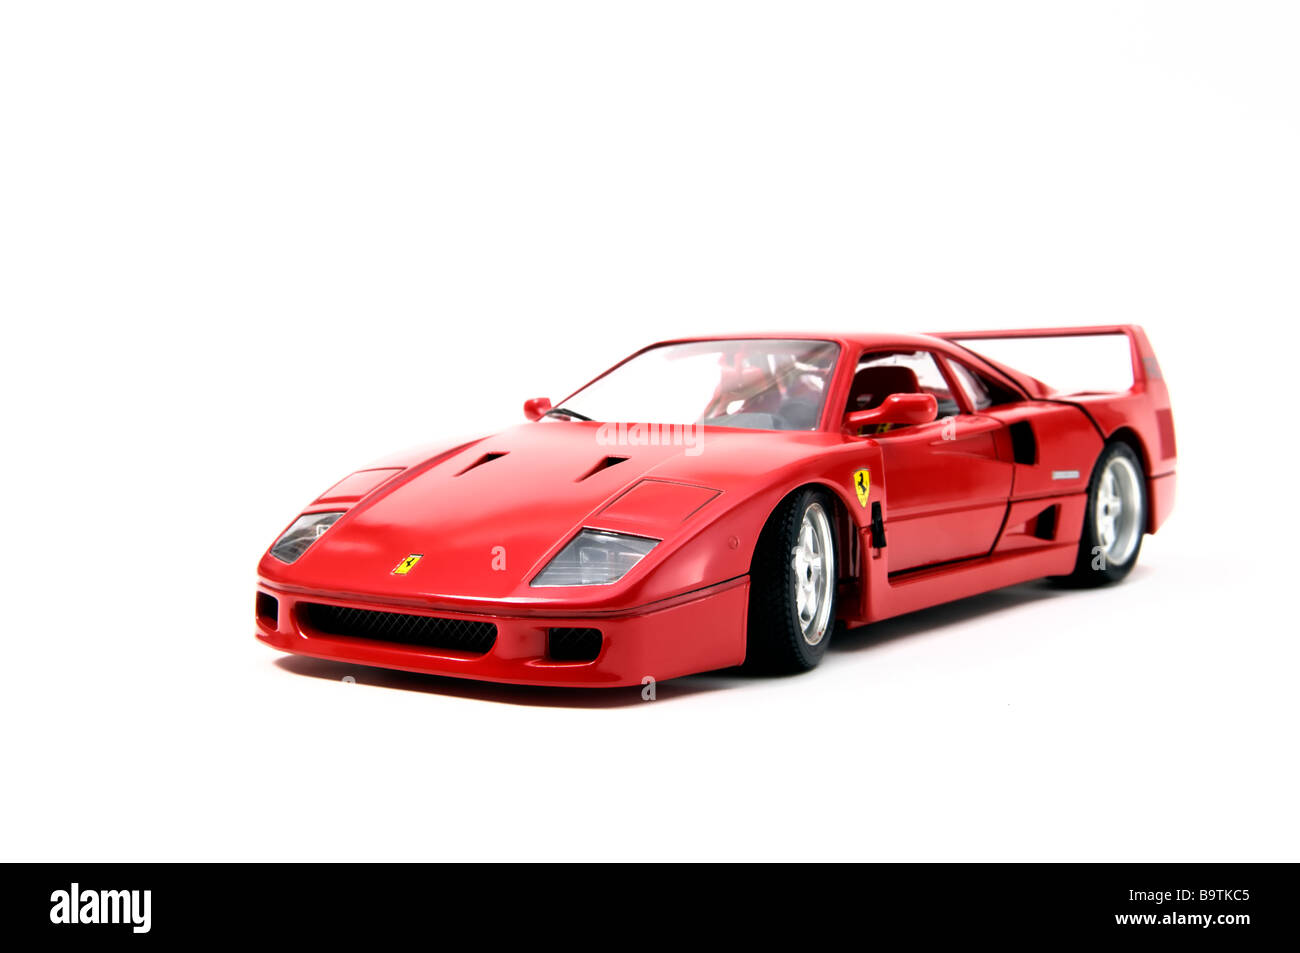 Miniature replica of a red Ferrari F40 model car made by model car manufacturer Bburago on white background Stock Photo